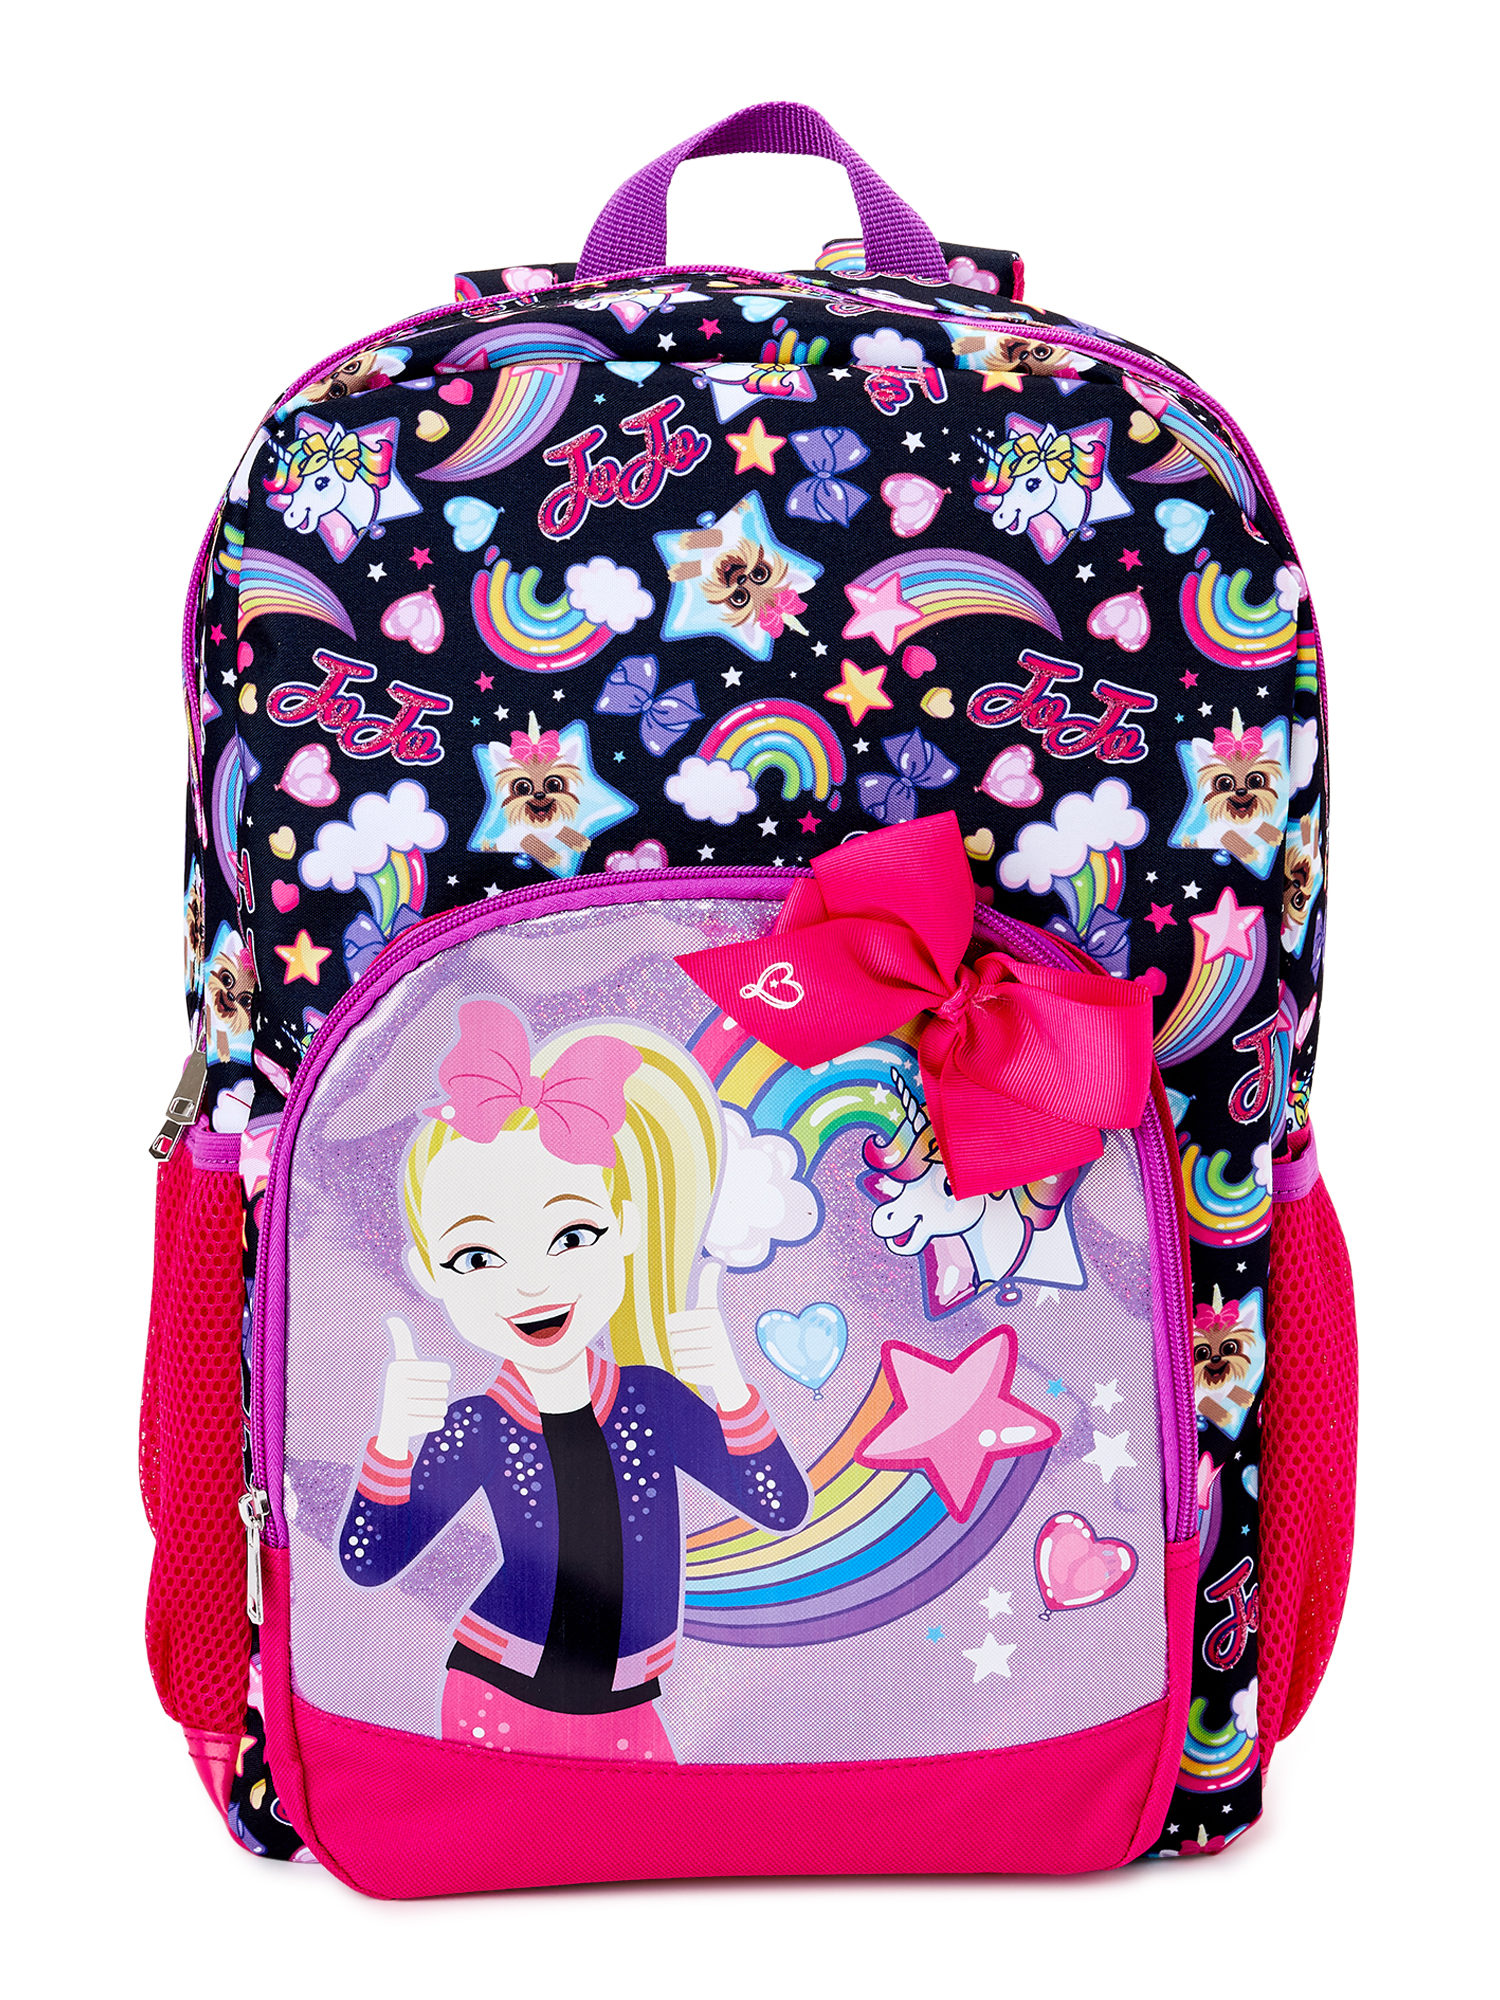 Nickelodeon Jojo Siwa Follow Your Dream Girls' Backpack - image 1 of 5